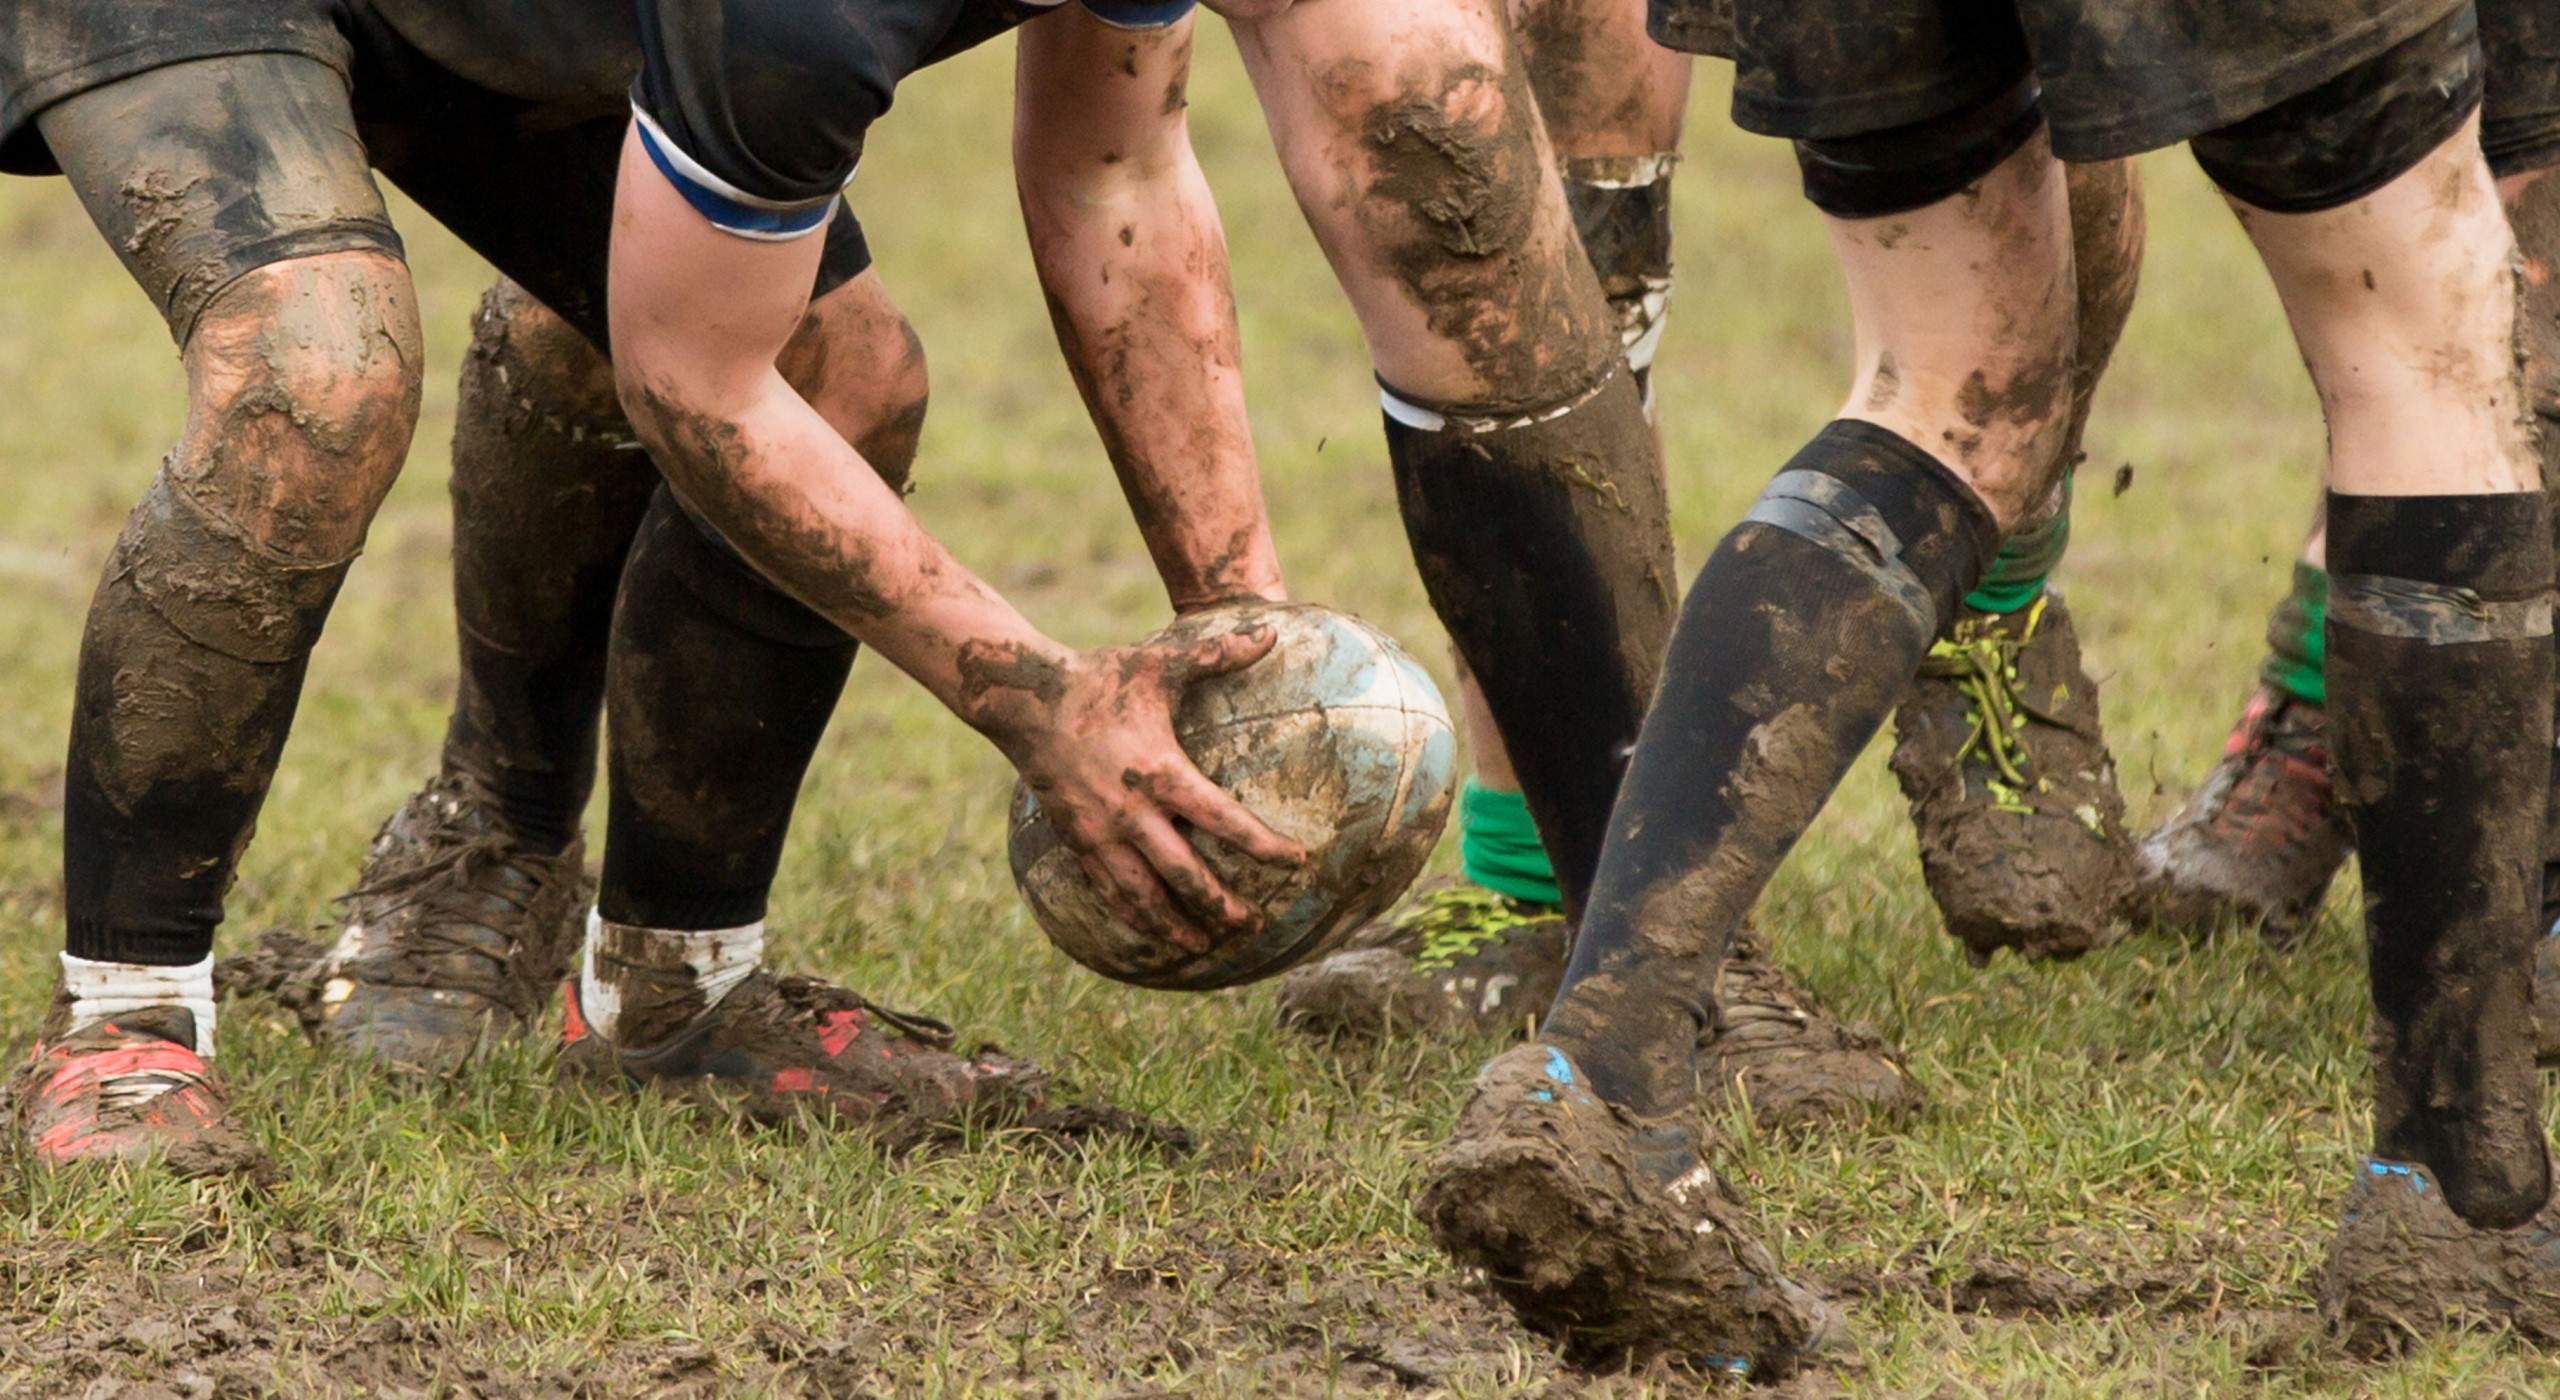 News - Rugby Sponsor